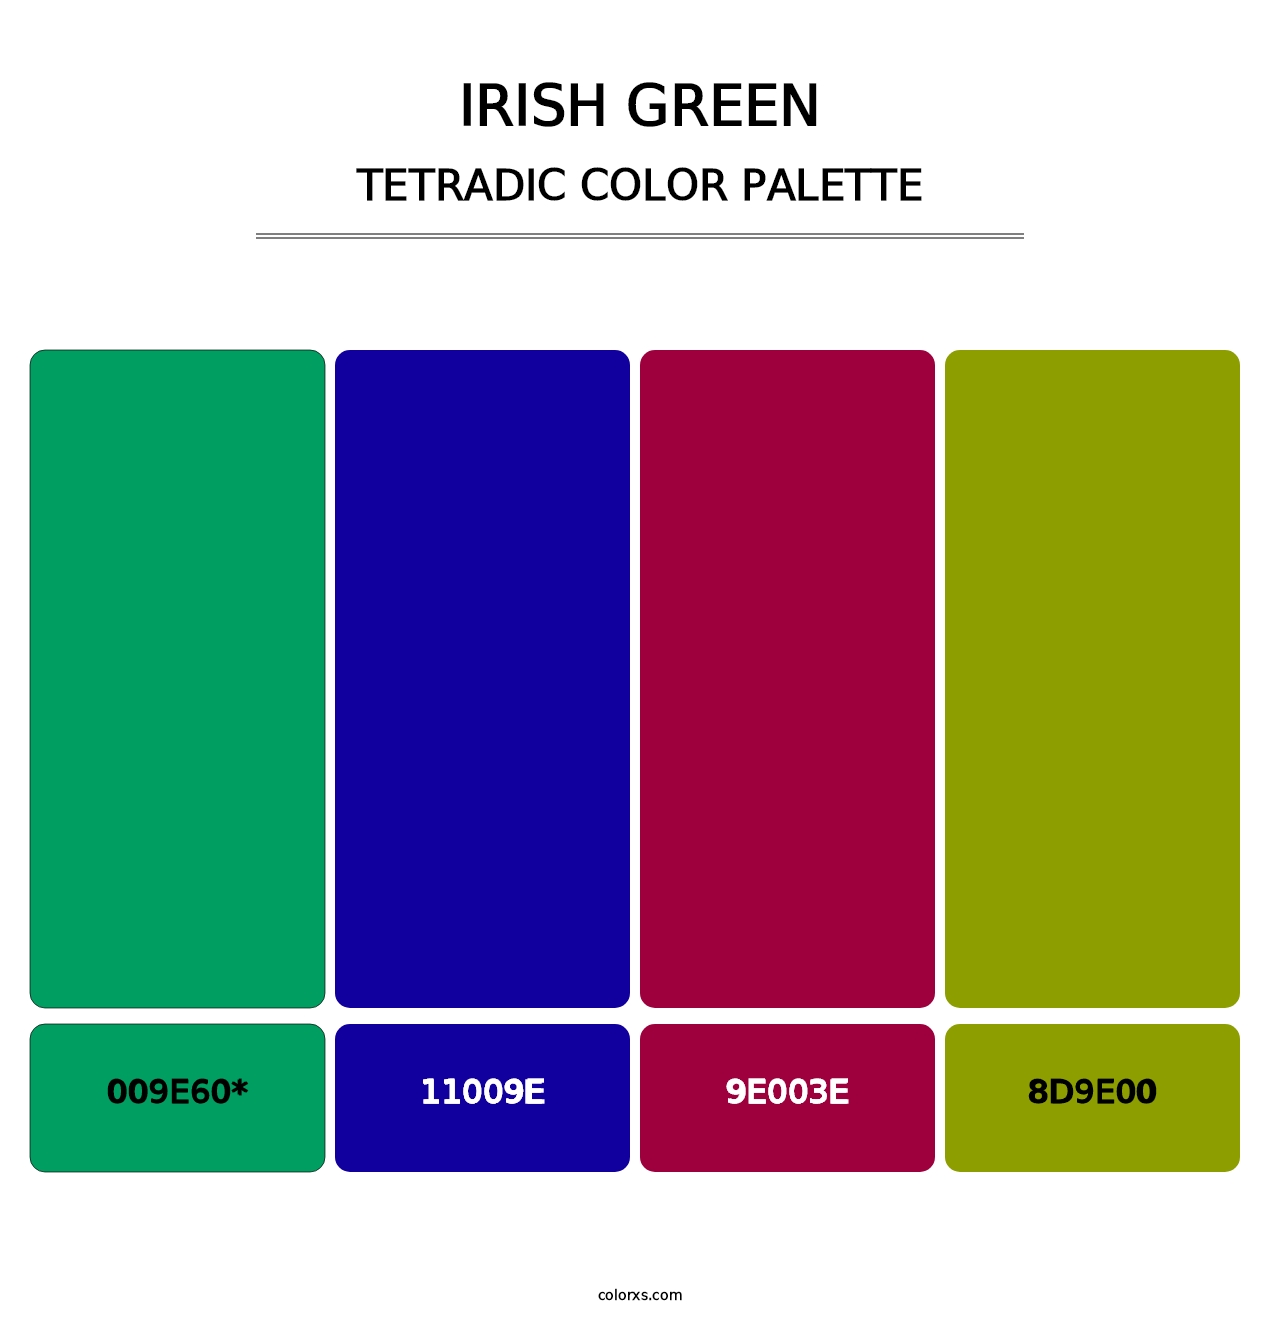 Irish Green - Tetradic Color Palette